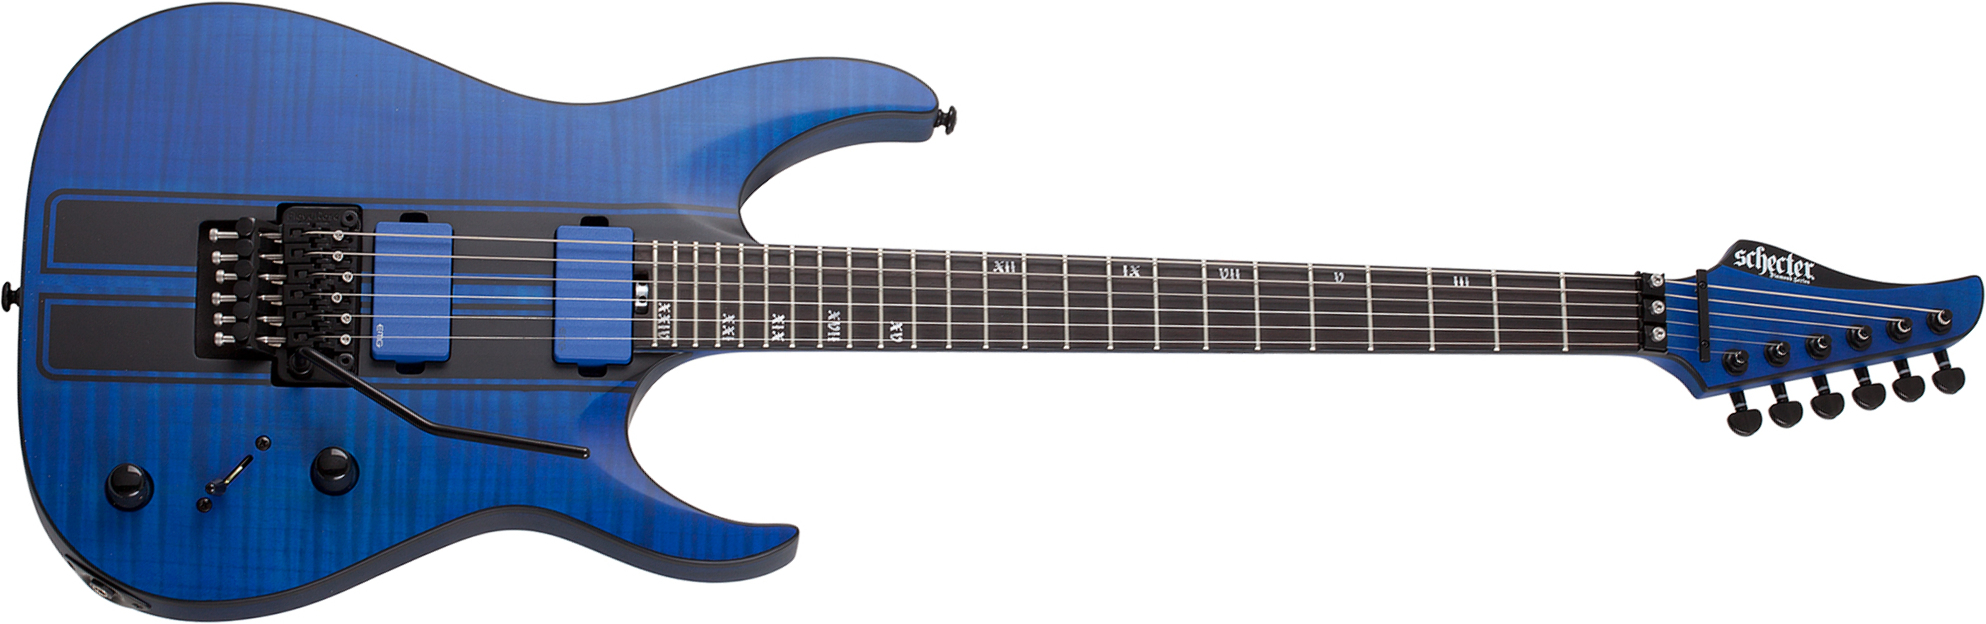 Schecter Banshee Gt Fr 2h Emg Eb - Satin Trans Blue - Str shape electric guitar - Main picture